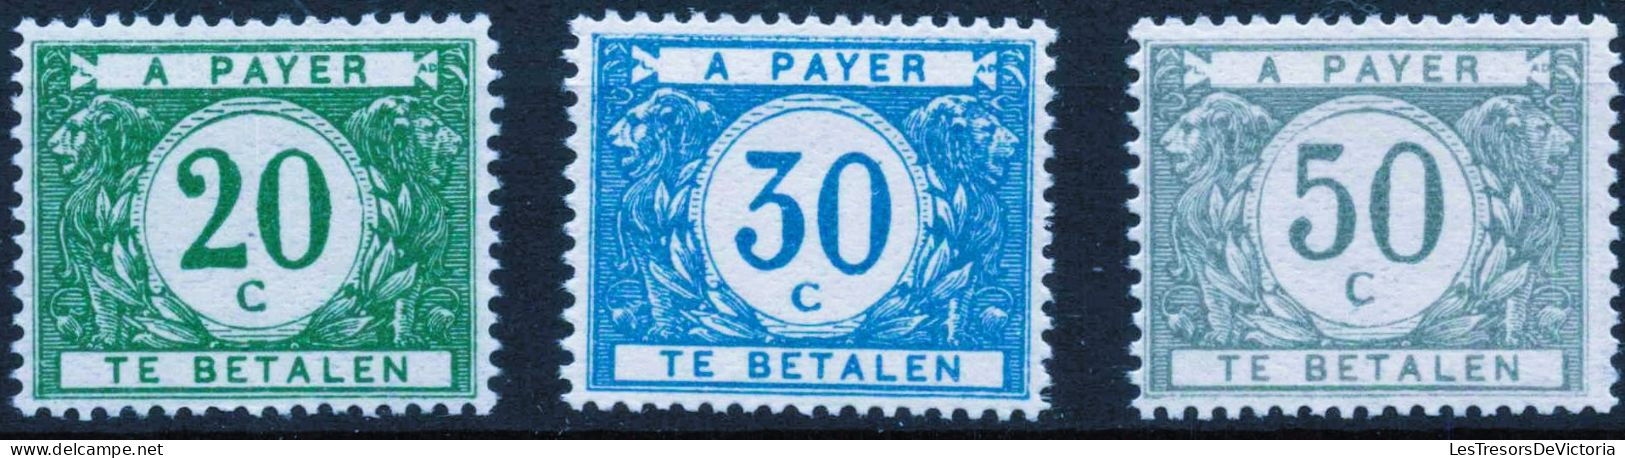 Timbres - Belgique - 1916 - Timbres Taxe - COB TX 12/16* - Cote 515 - Stamps